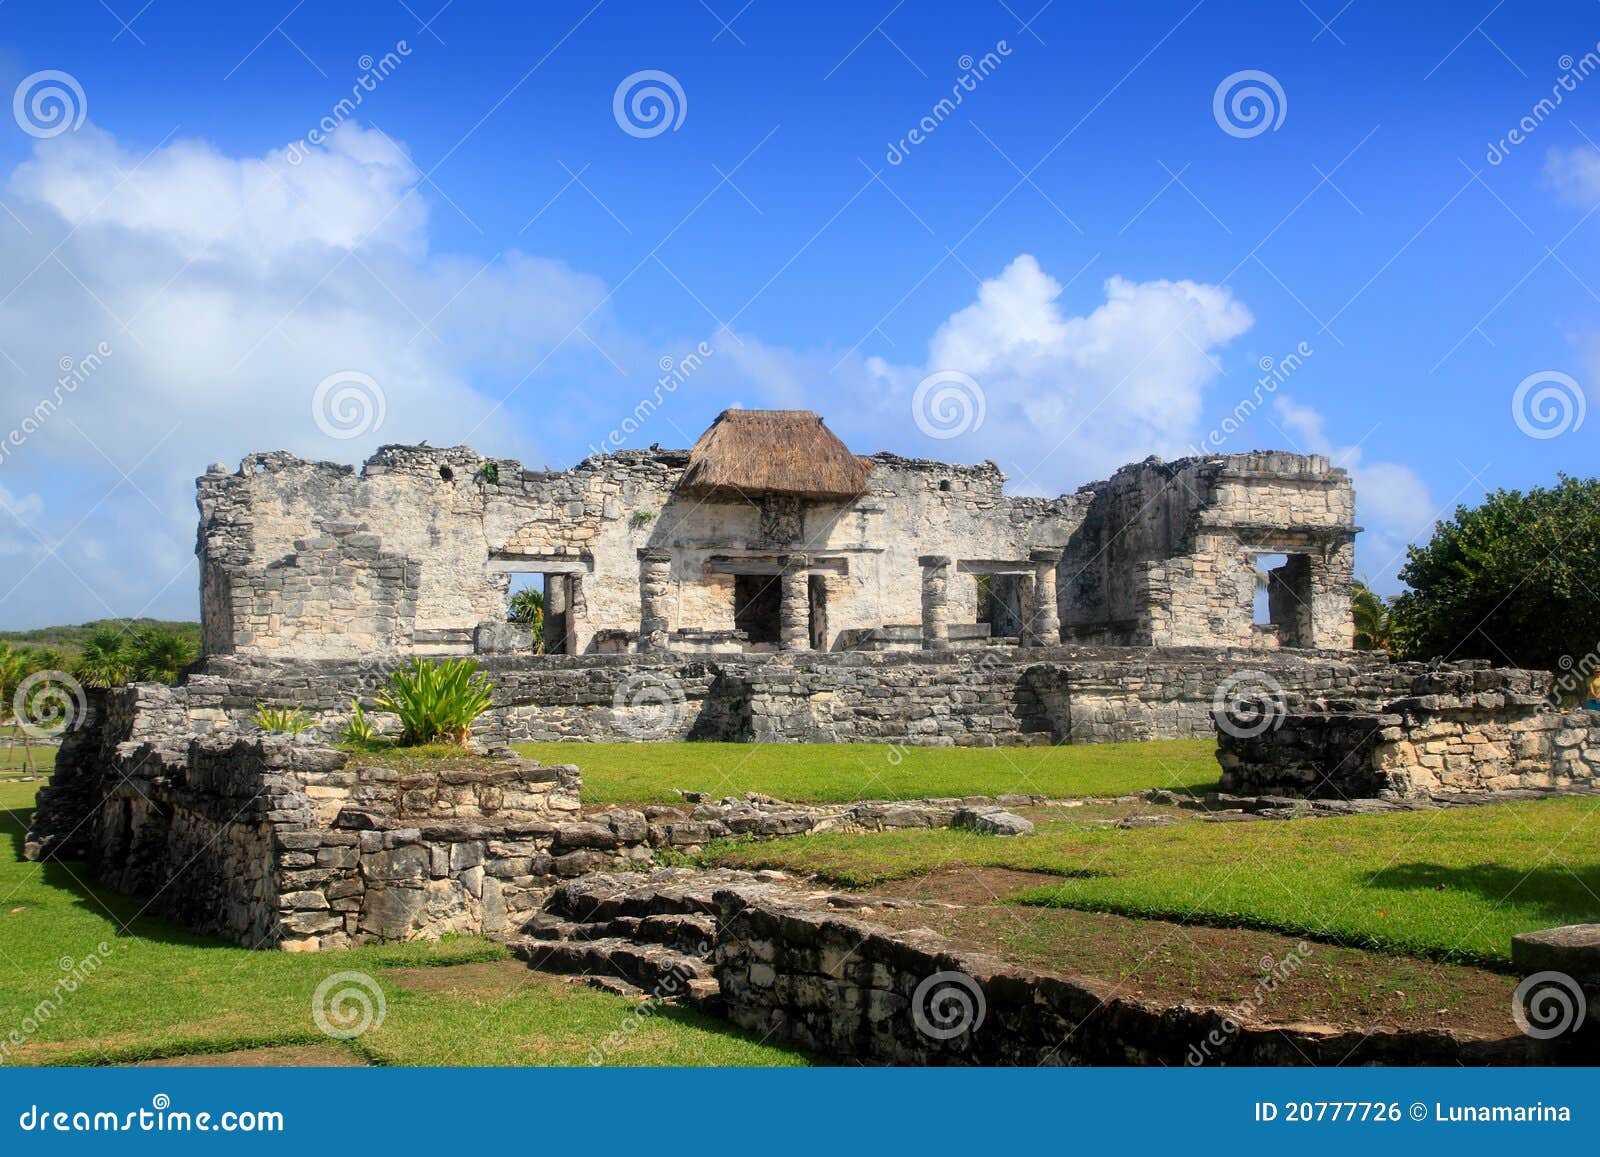 ancient tulum mayan ruins mexico quintana roo